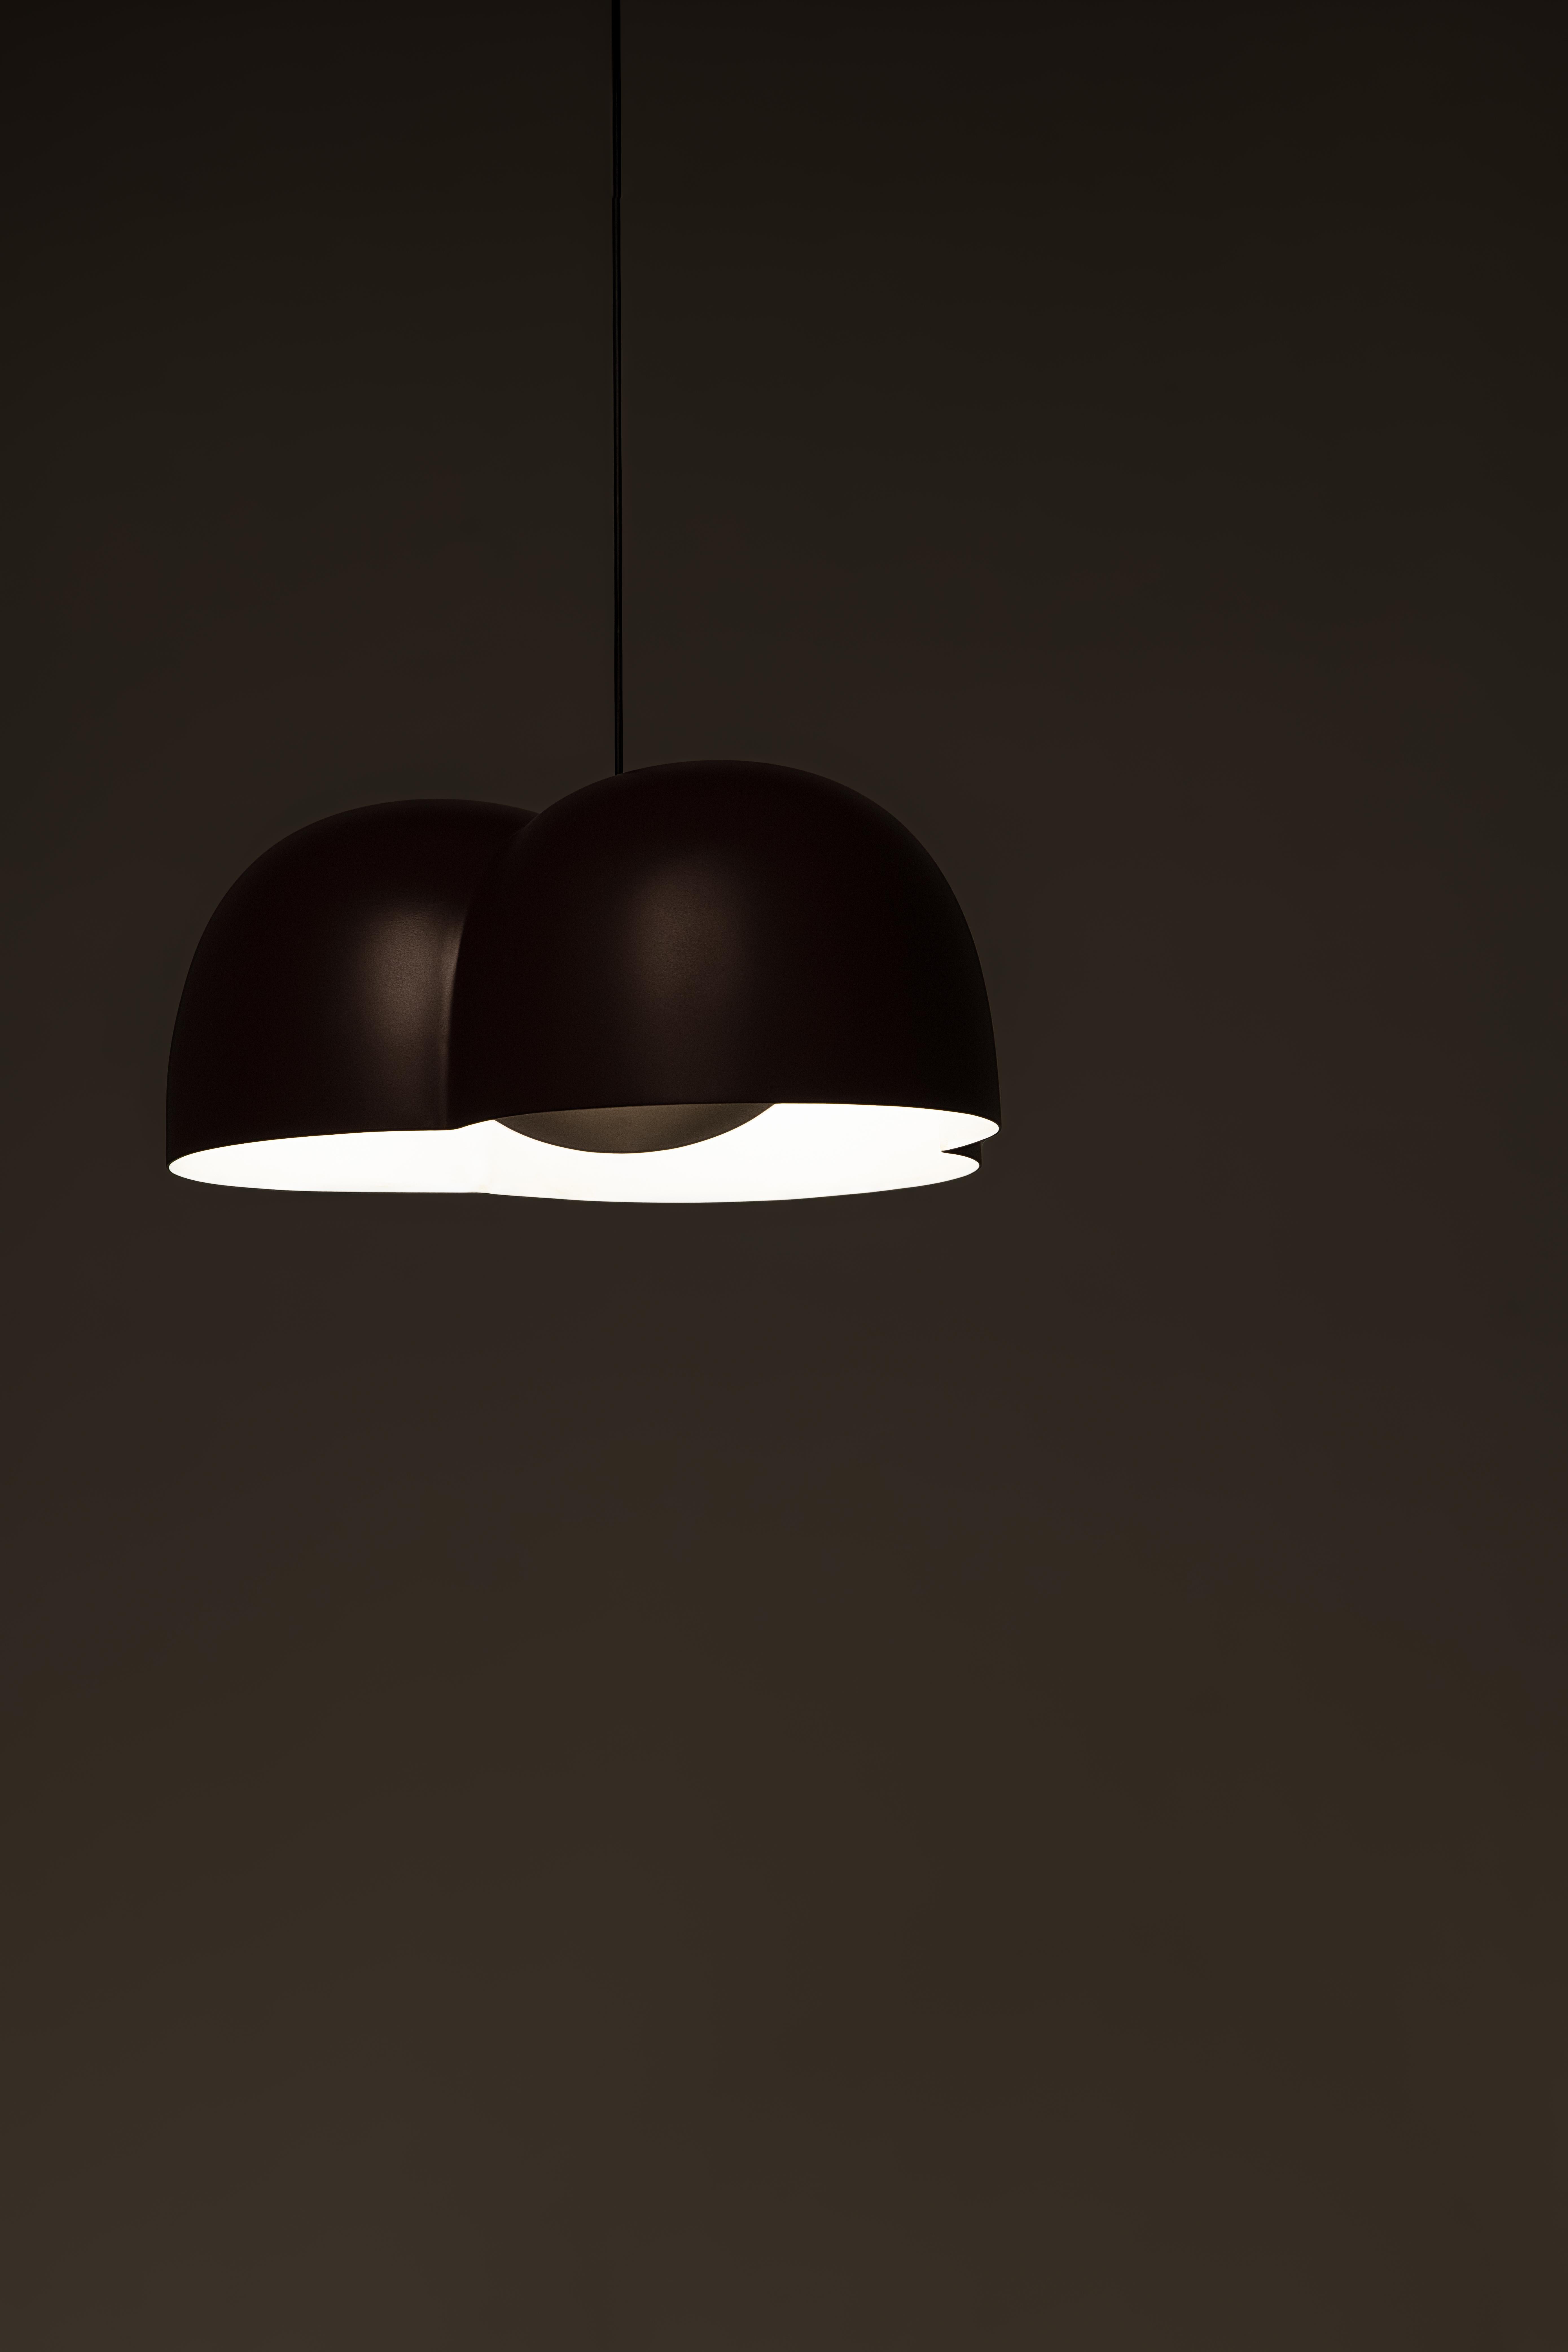 Korean Contemporary Pendant Lamp 'Cotton' by Sebastian Herkner x Ago, Large - Charcoal  For Sale